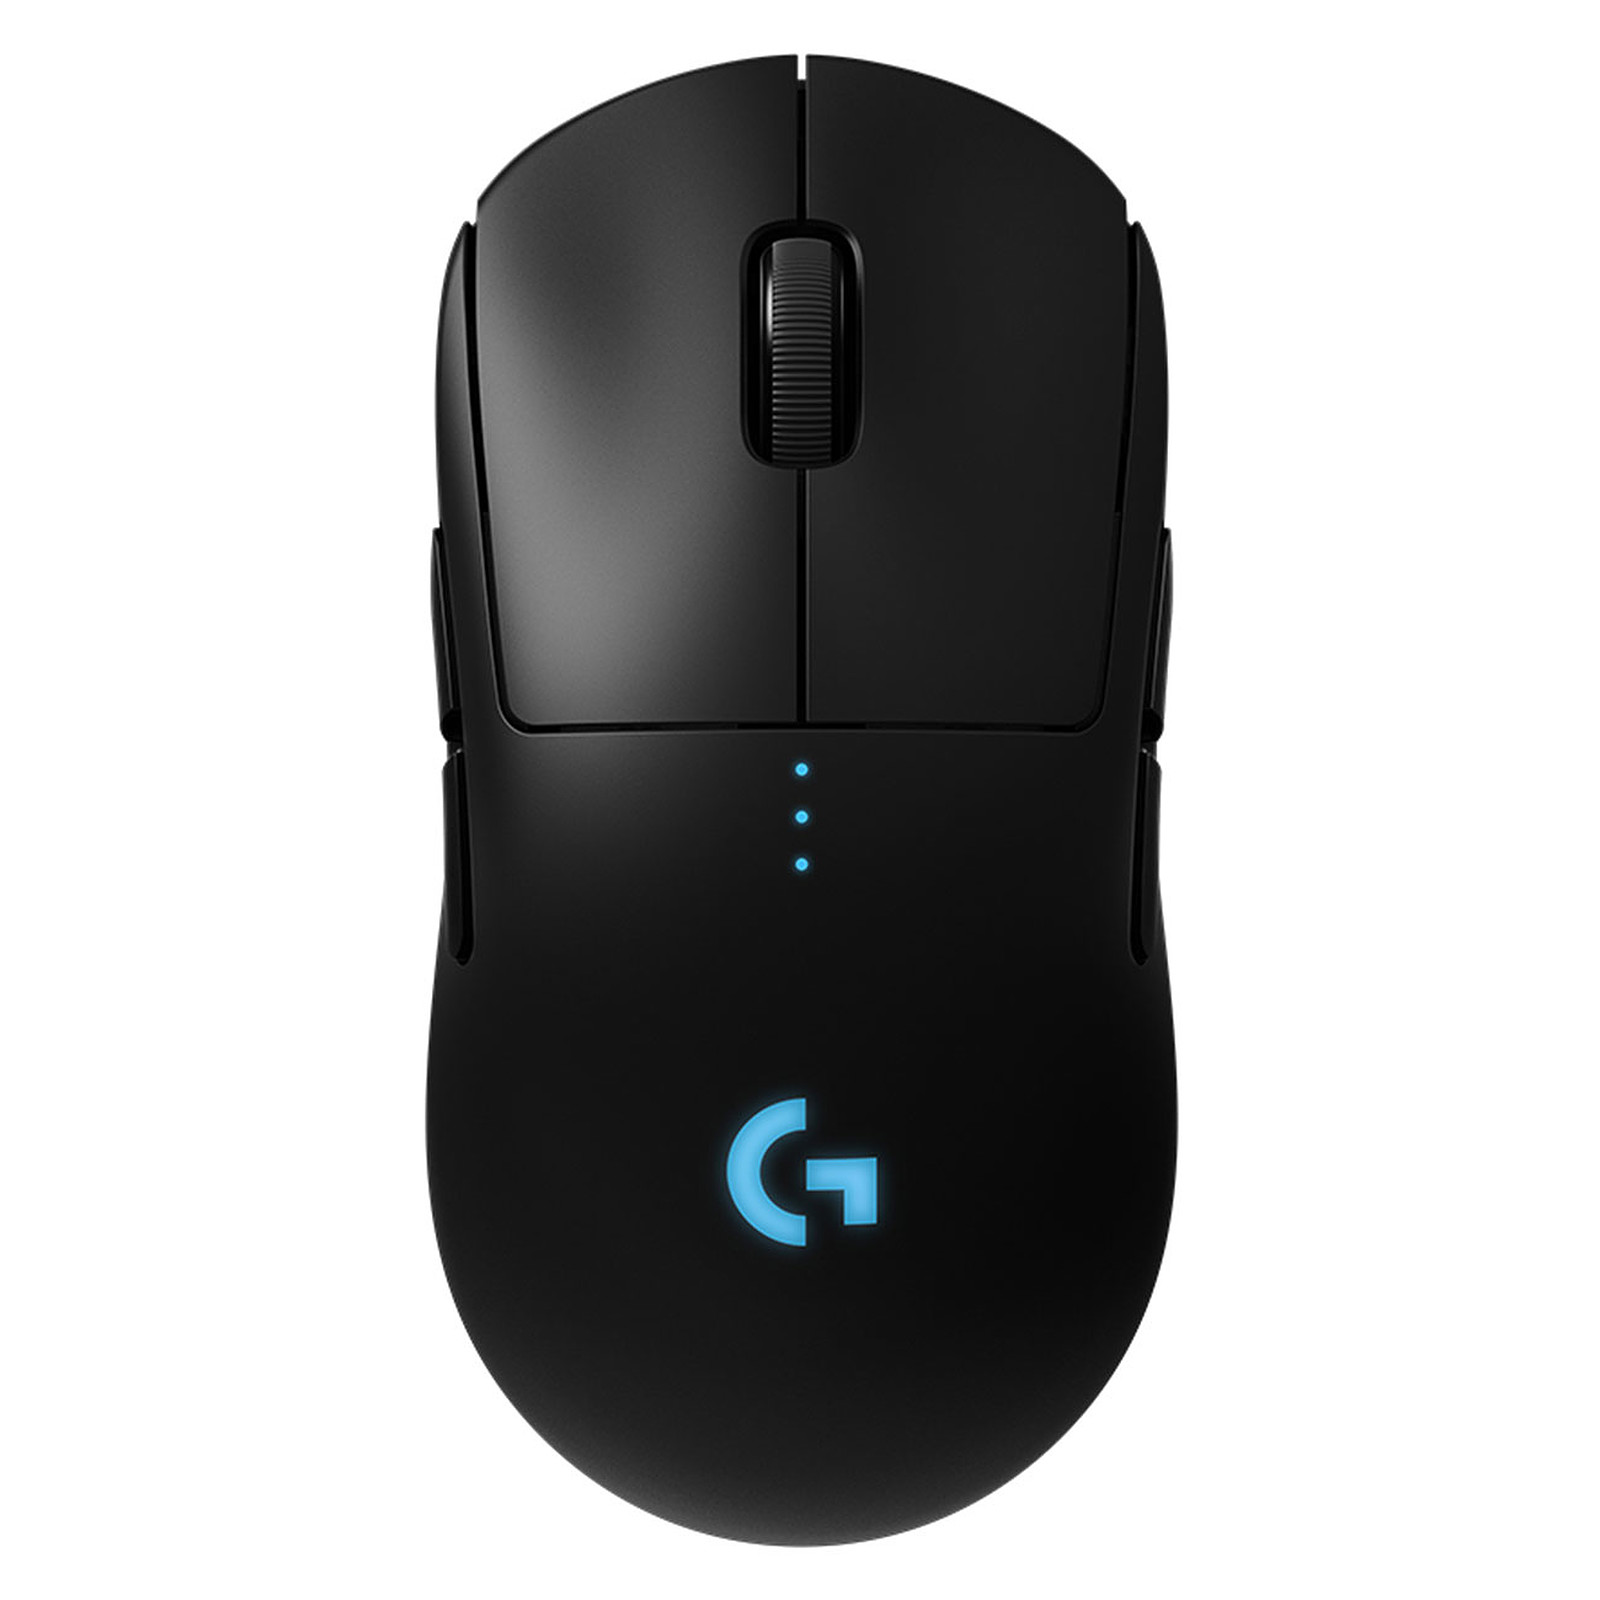 Logitech G Pro Wireless Gaming Mouse (Noir) - Souris PC Logitech G